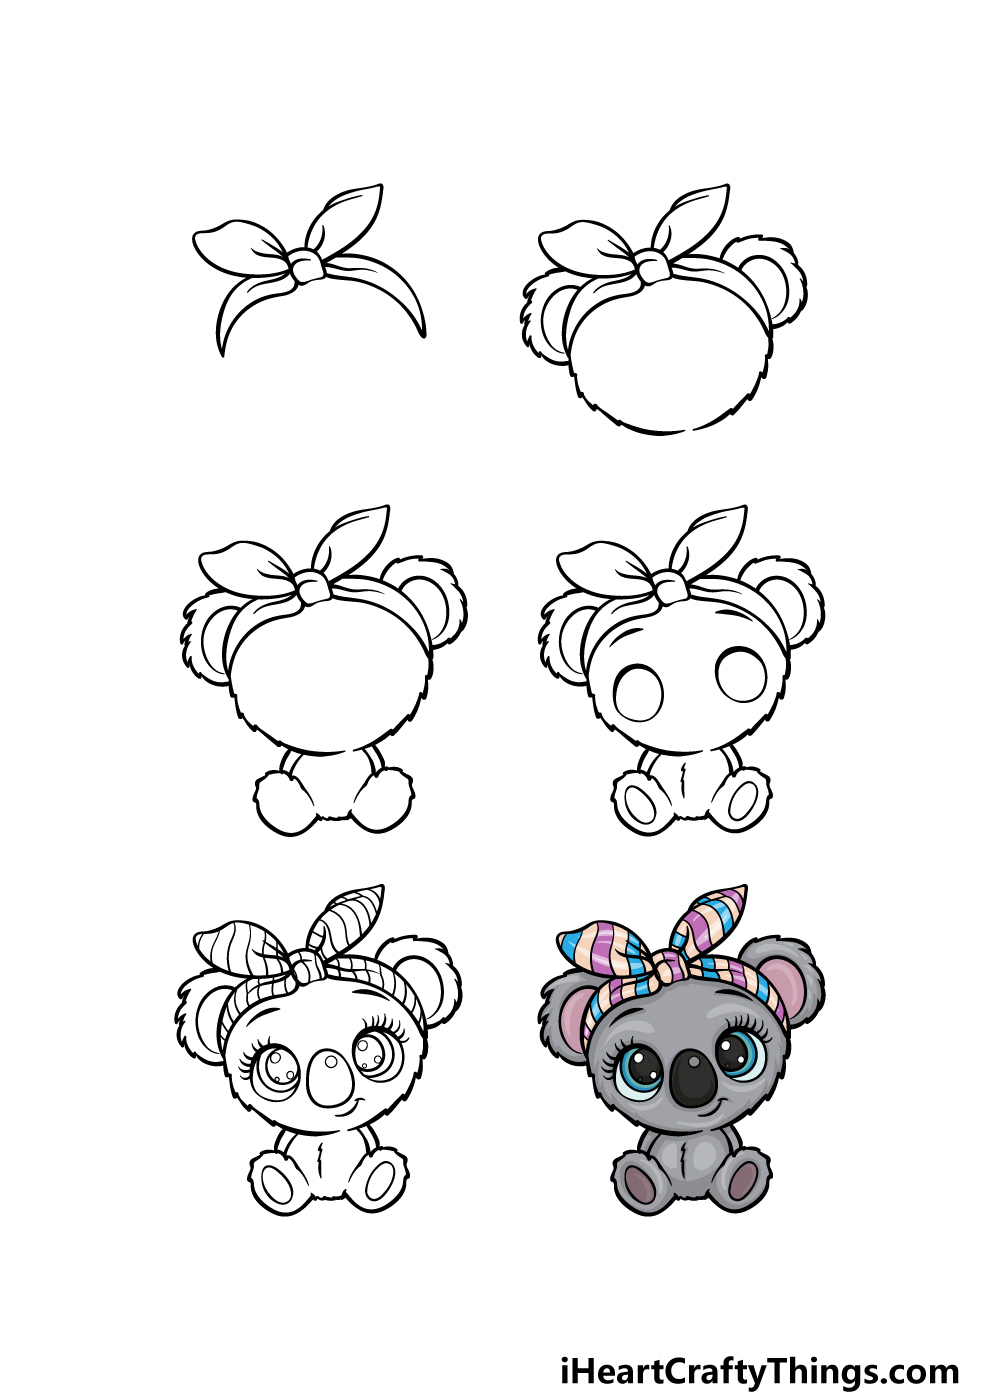 how to draw a Cute Koala in 6 steps